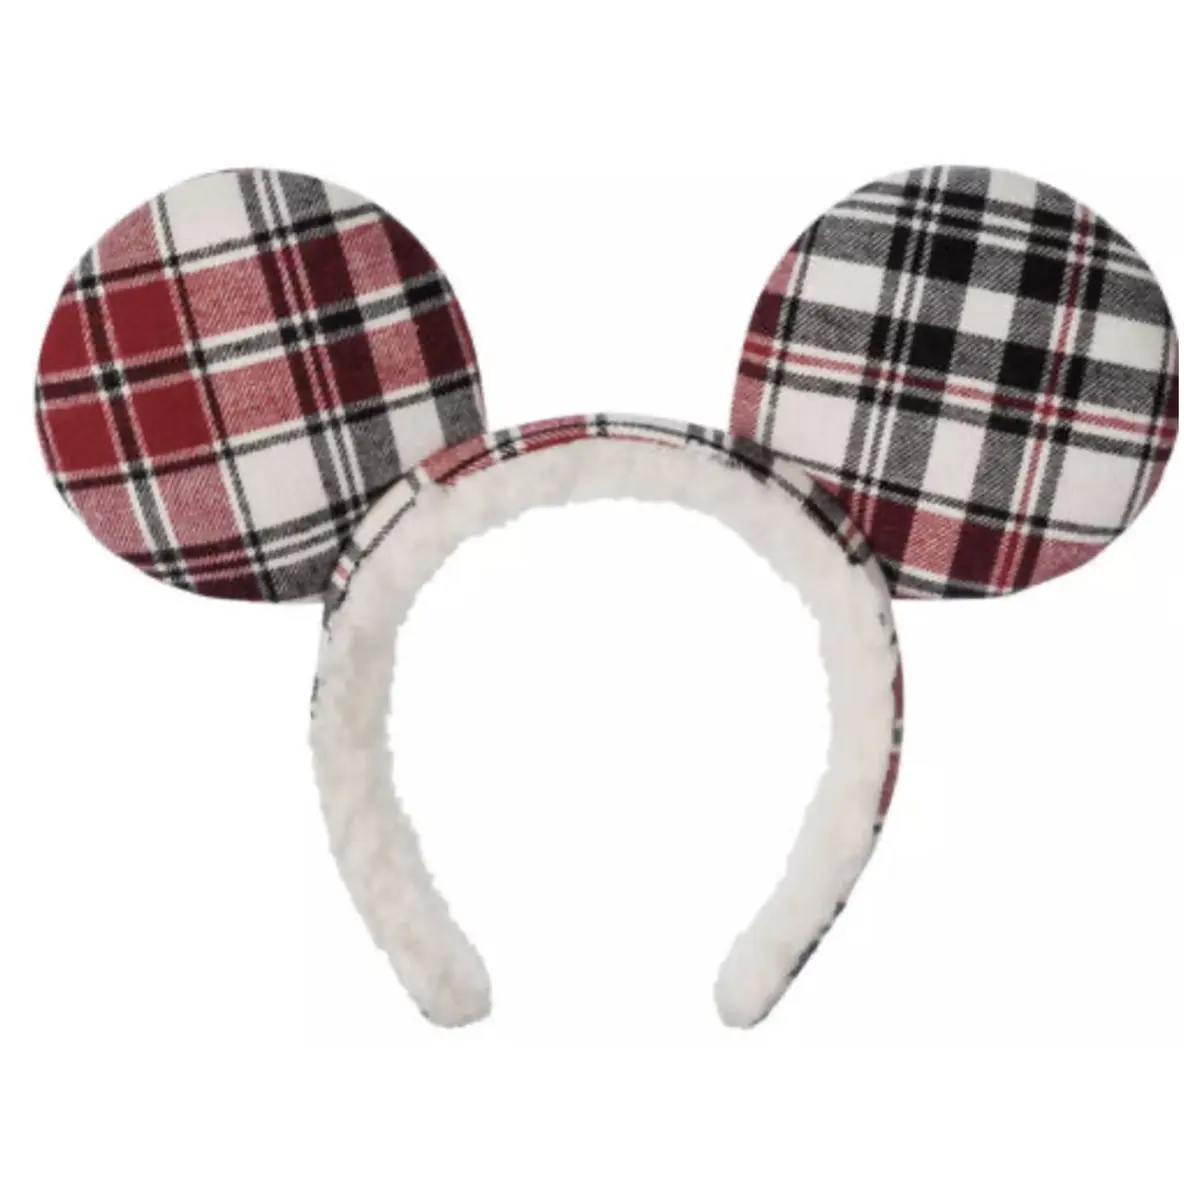 RENTAL Mickey Mouse Holiday Plaid Fuzzy Christmas Ears Headband